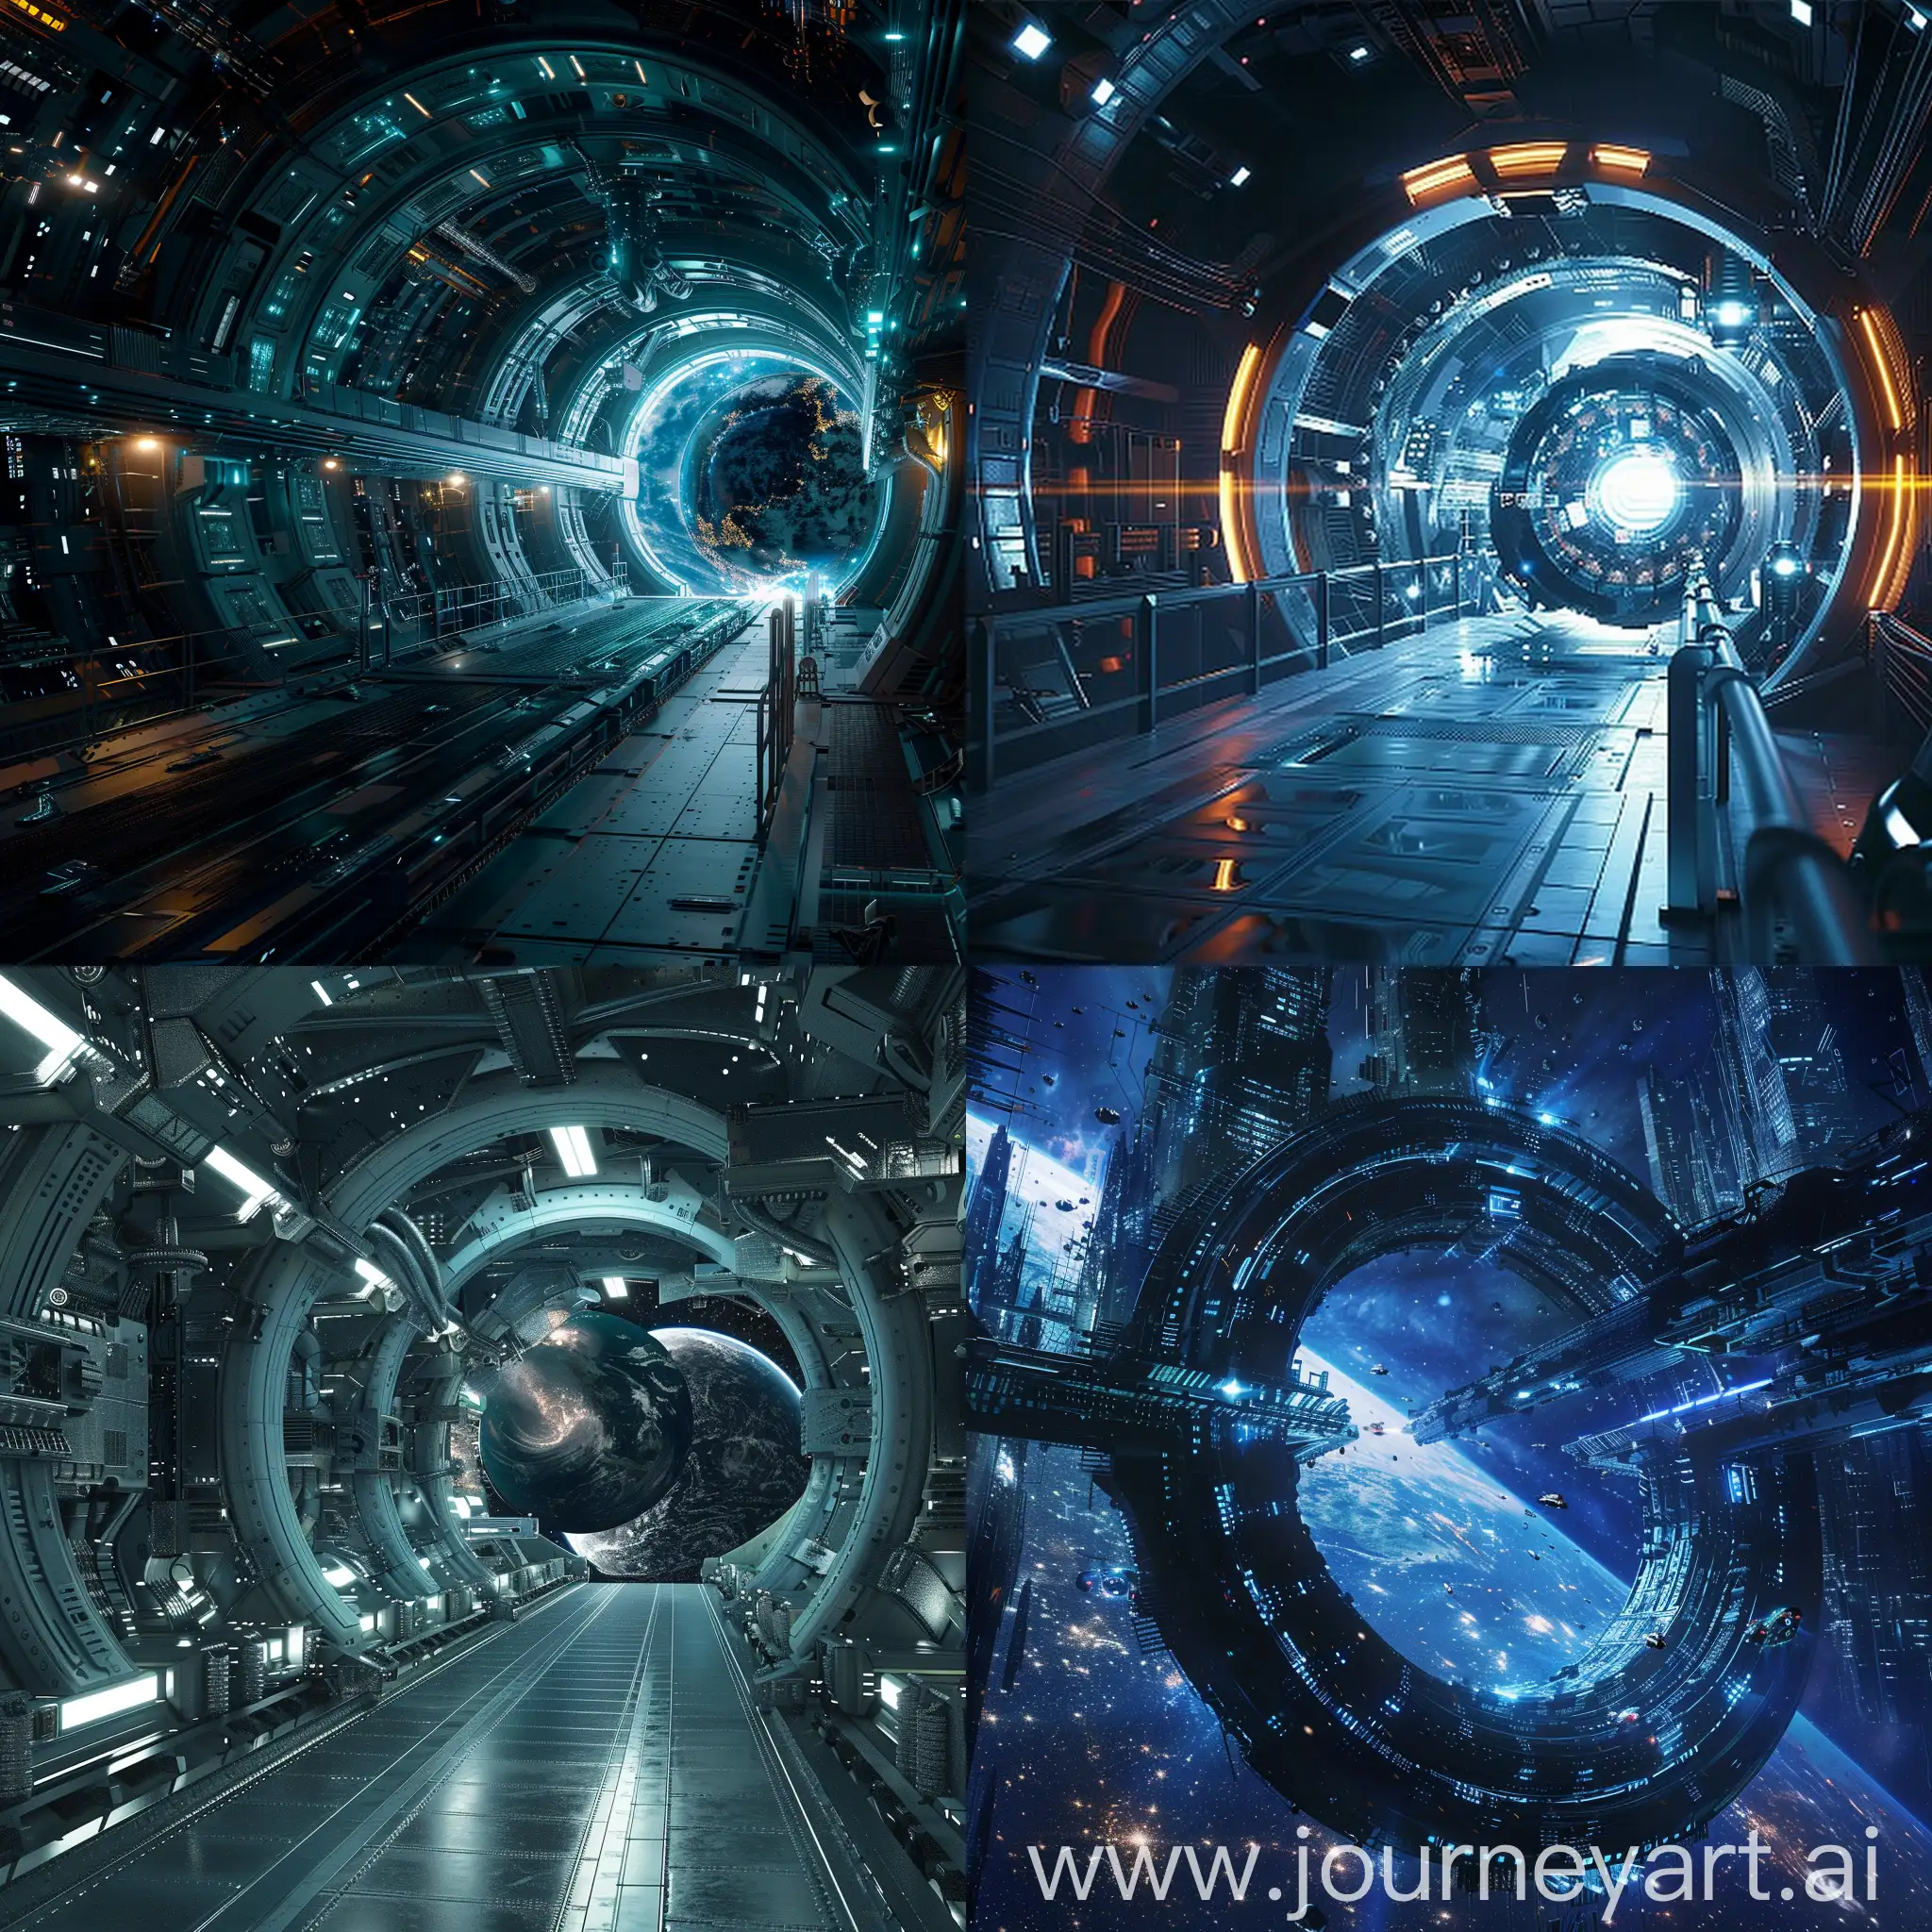 Teleportation portal, space station, fiction, SCIFI, cinematic